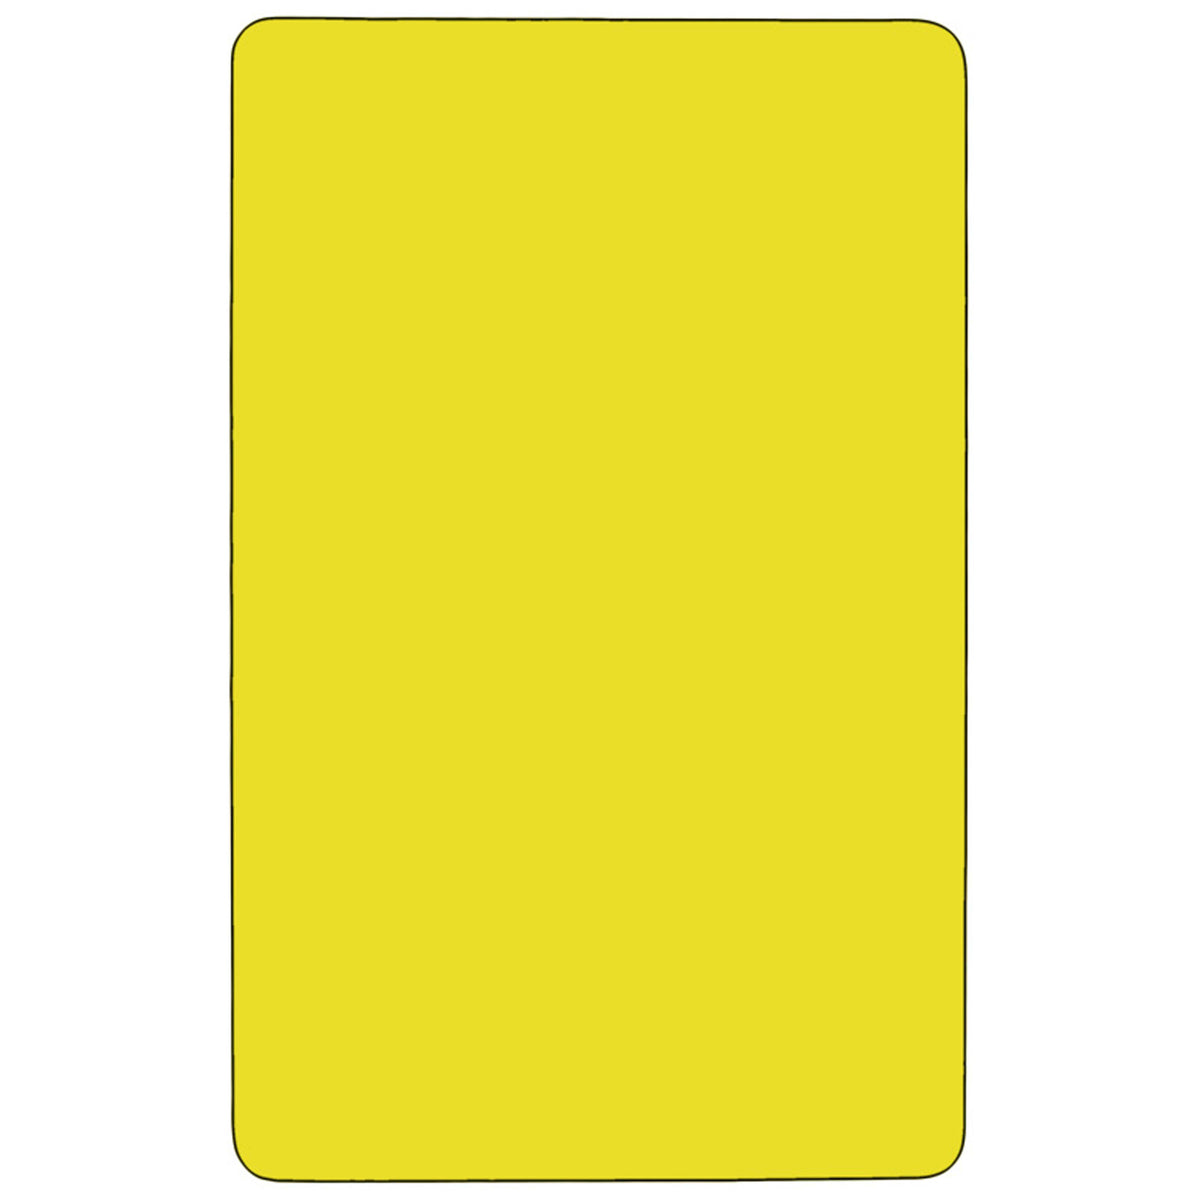 Yellow |#| Mobile 24inchW x 48inchL Rectangular Yellow HP Laminate Adjustable Activity Table